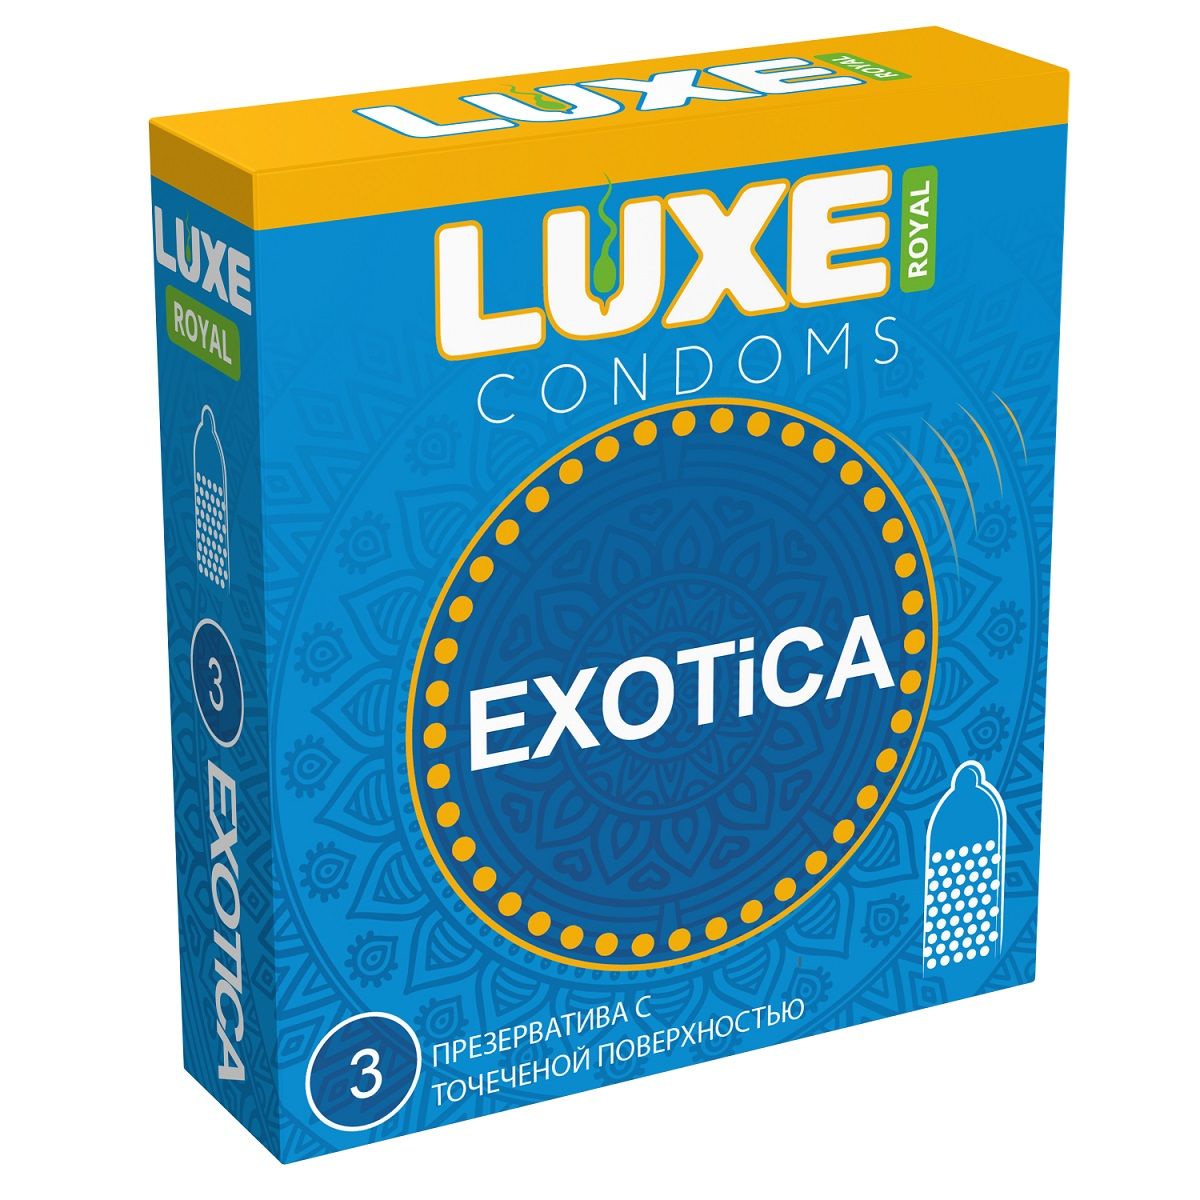   LUXE Royal Exotica - 3 .